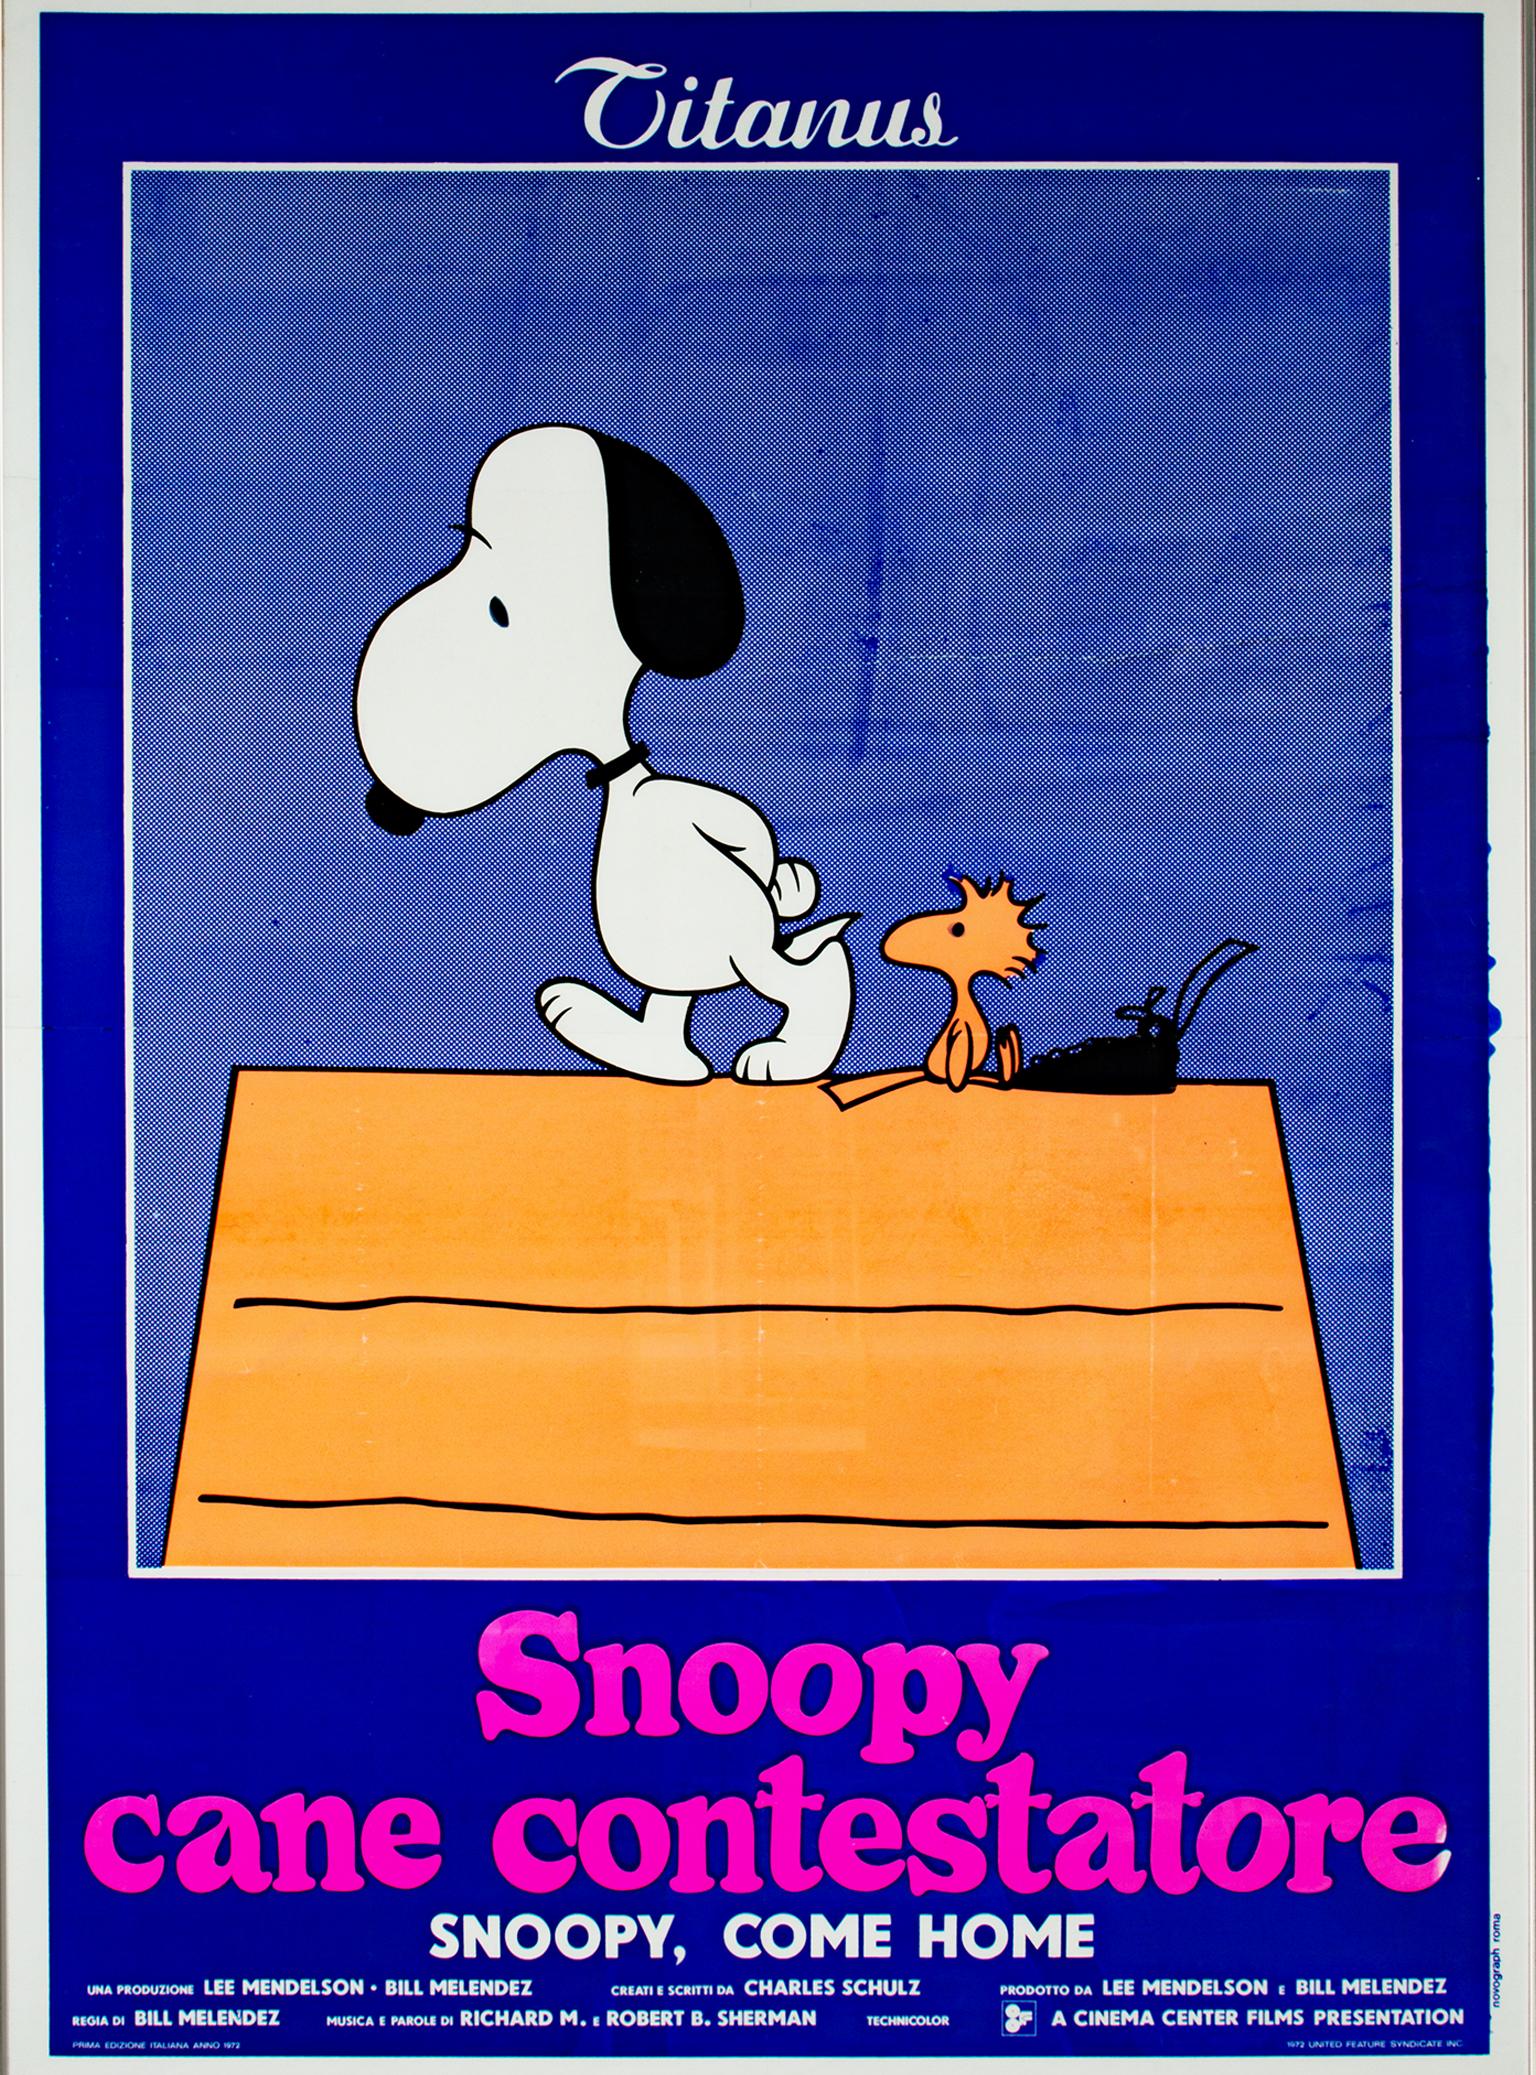 Charles Schulz Animal Print - 20th century color lithograph poster cartoon Snoopy animal print dog bird text